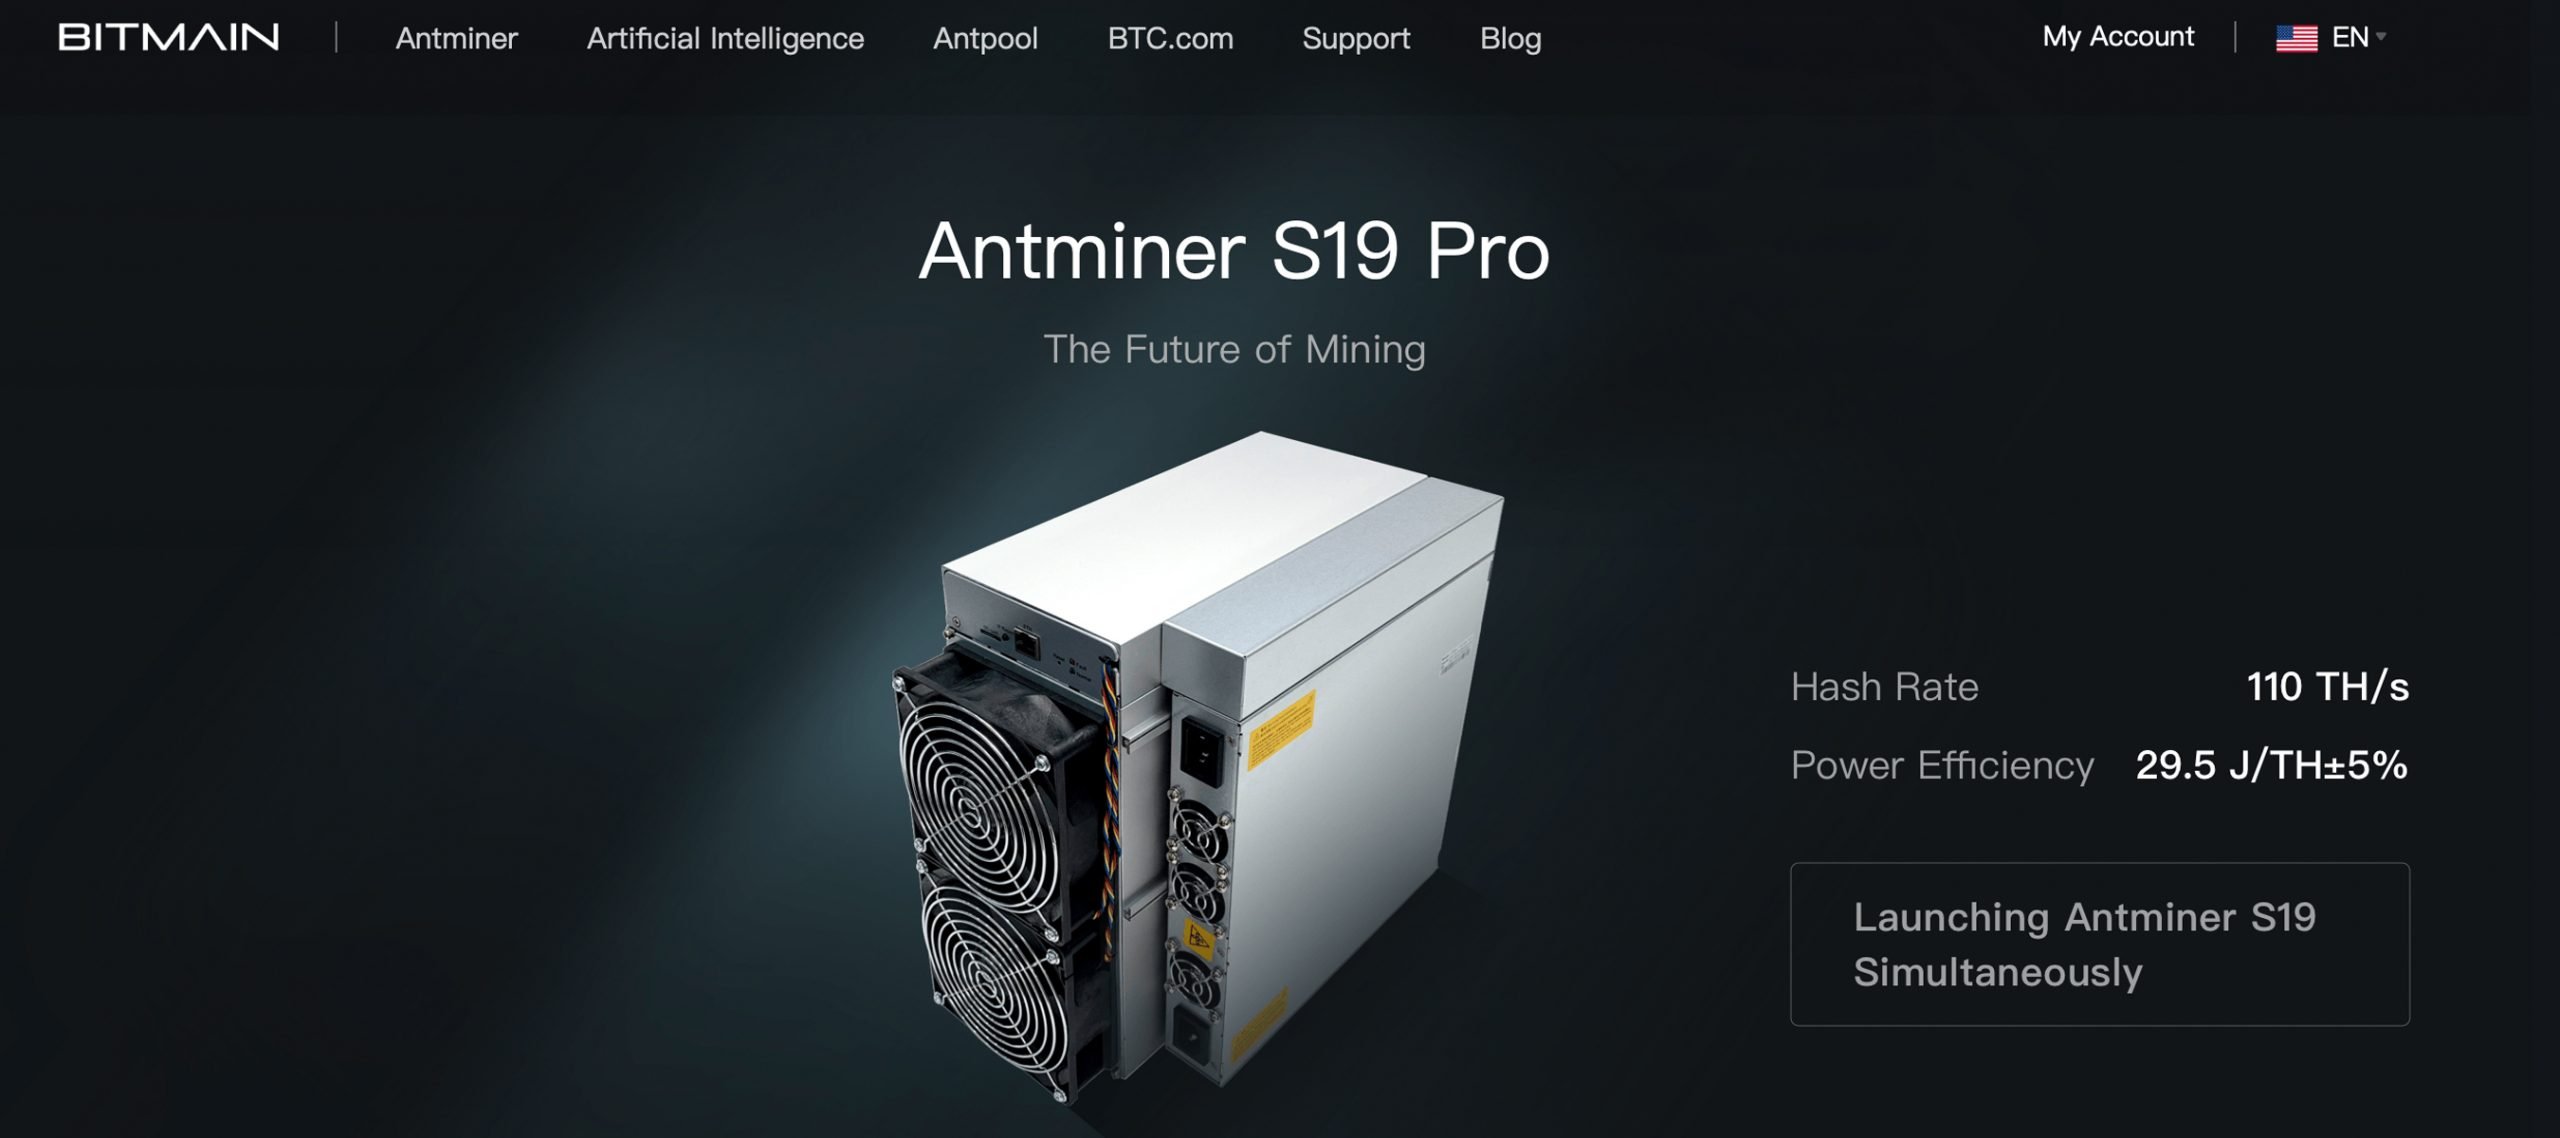 3 Tag Cloud Mining Bitcoin Miner Bitmain Antminer S19 90 TH/s SHA256 